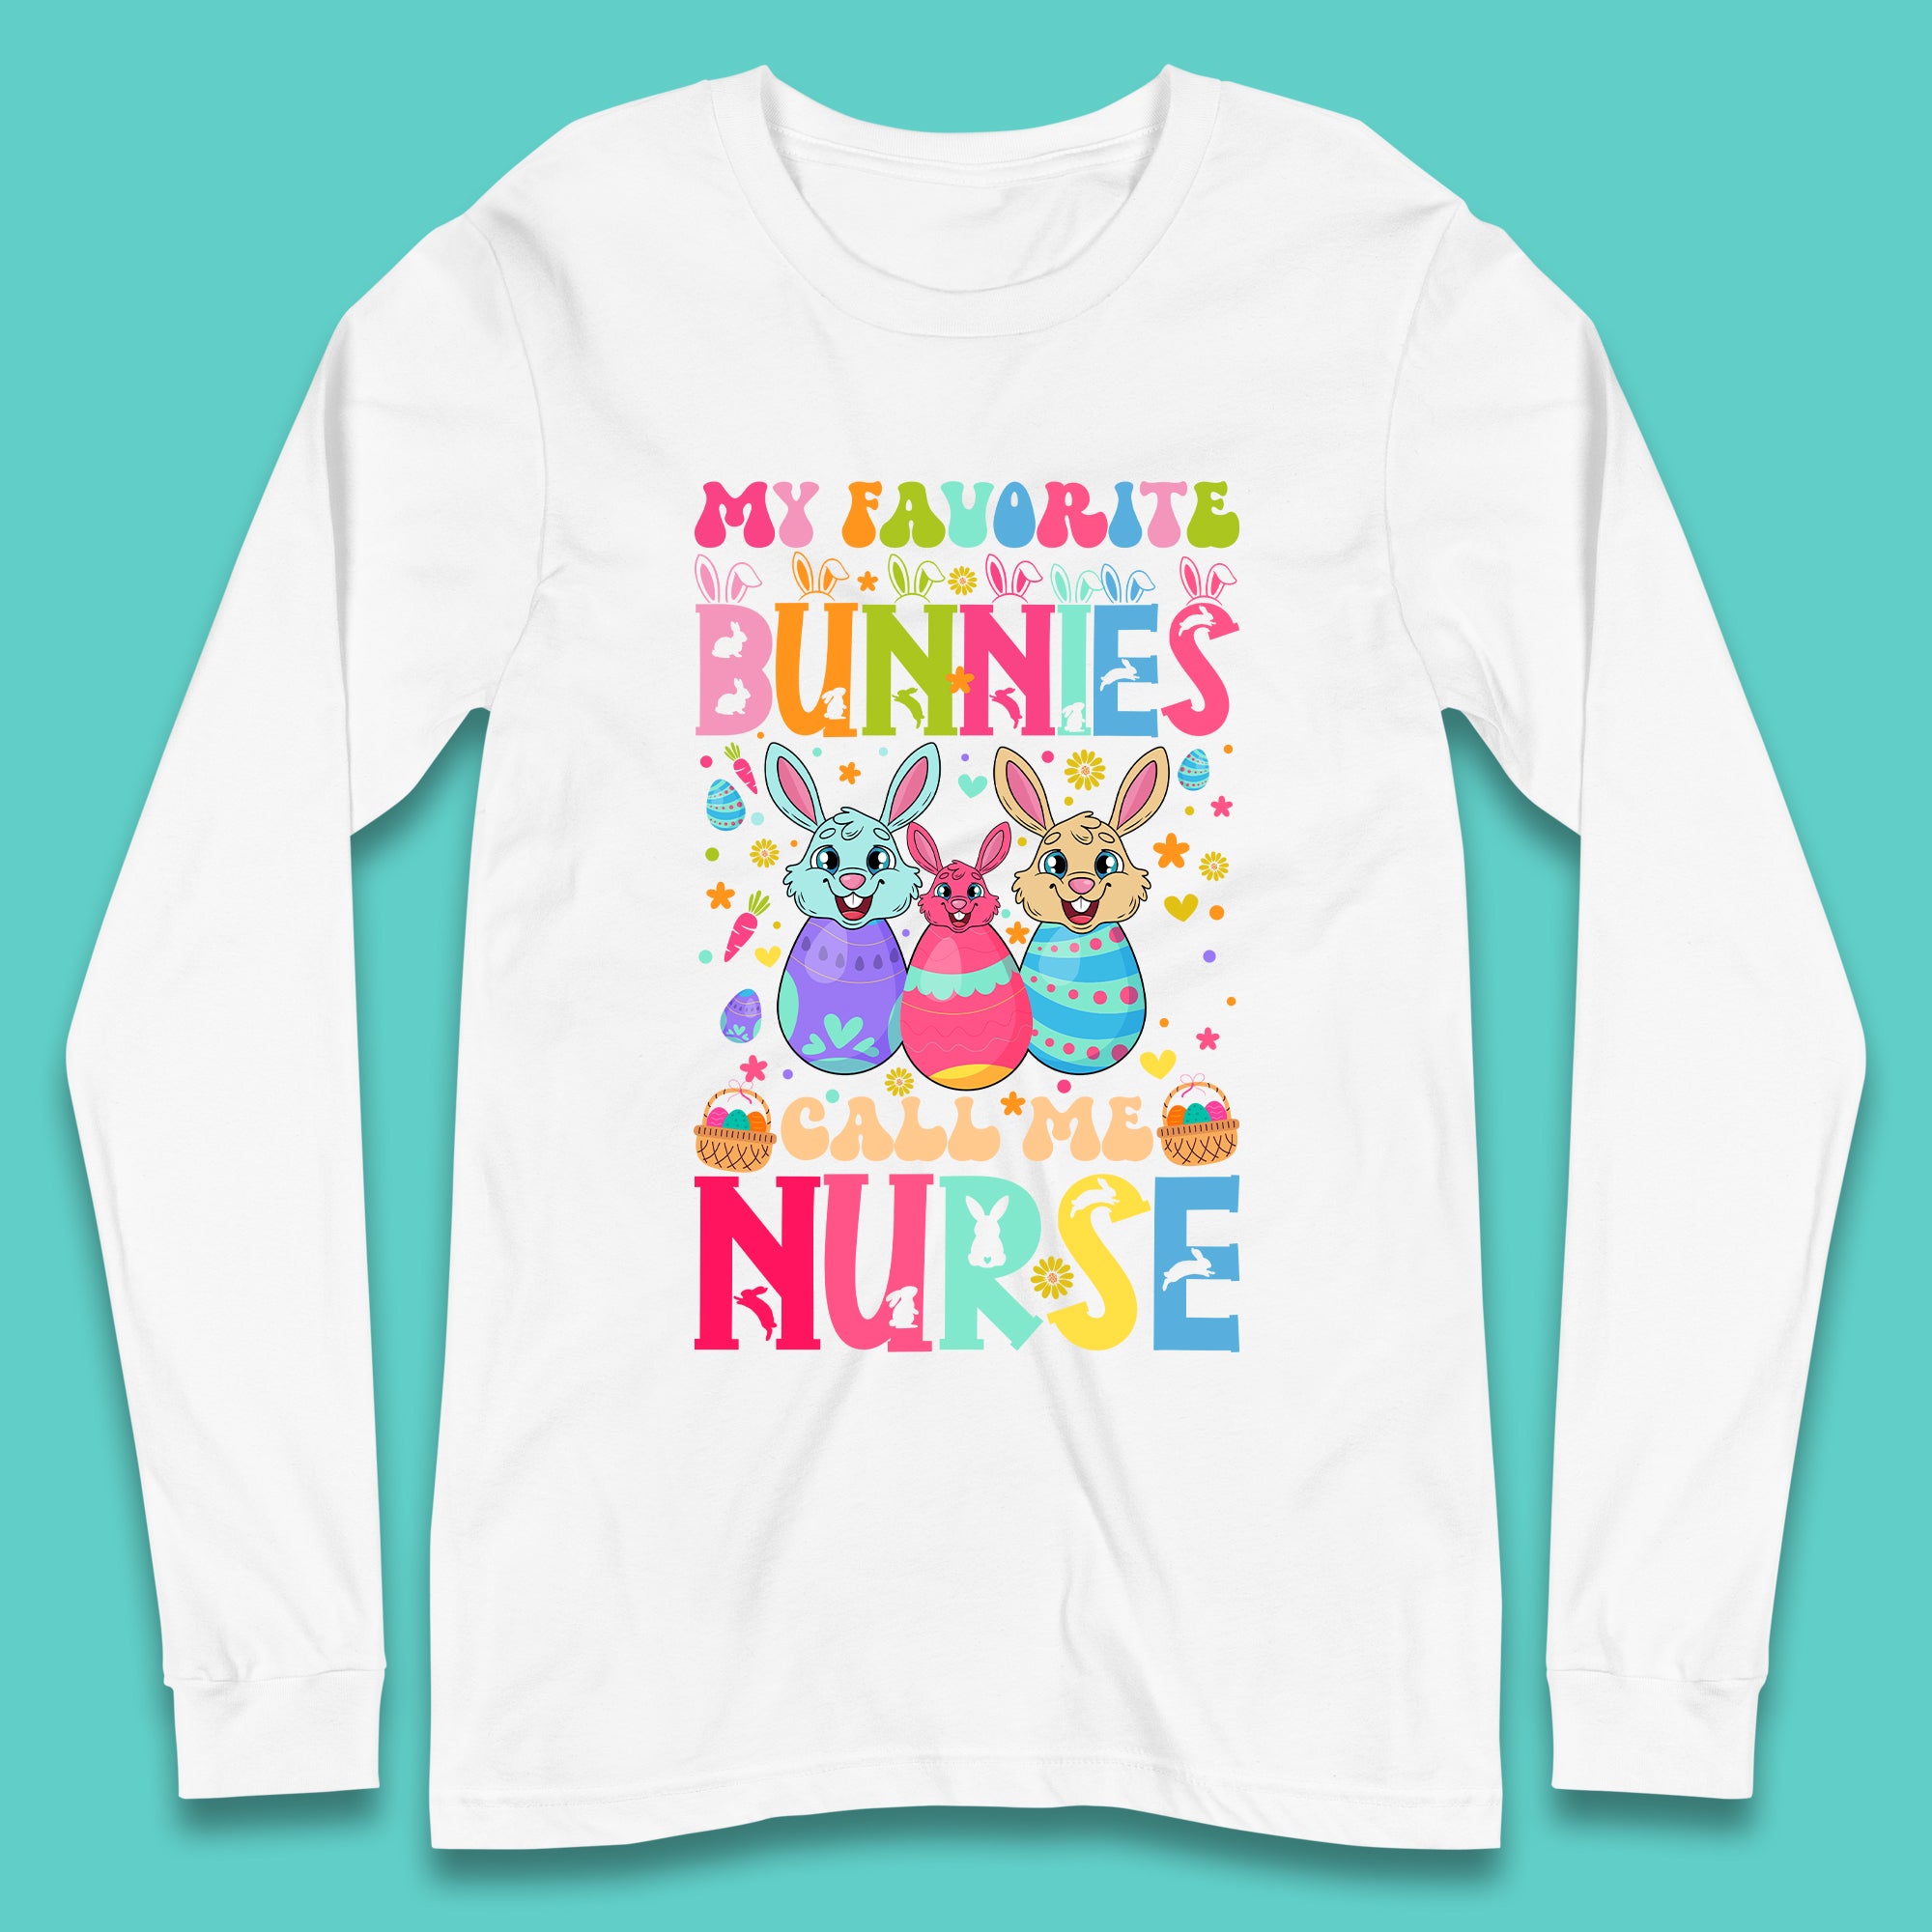 My Favorite Bunnies Call Me Nurse Long Sleeve T-Shirt